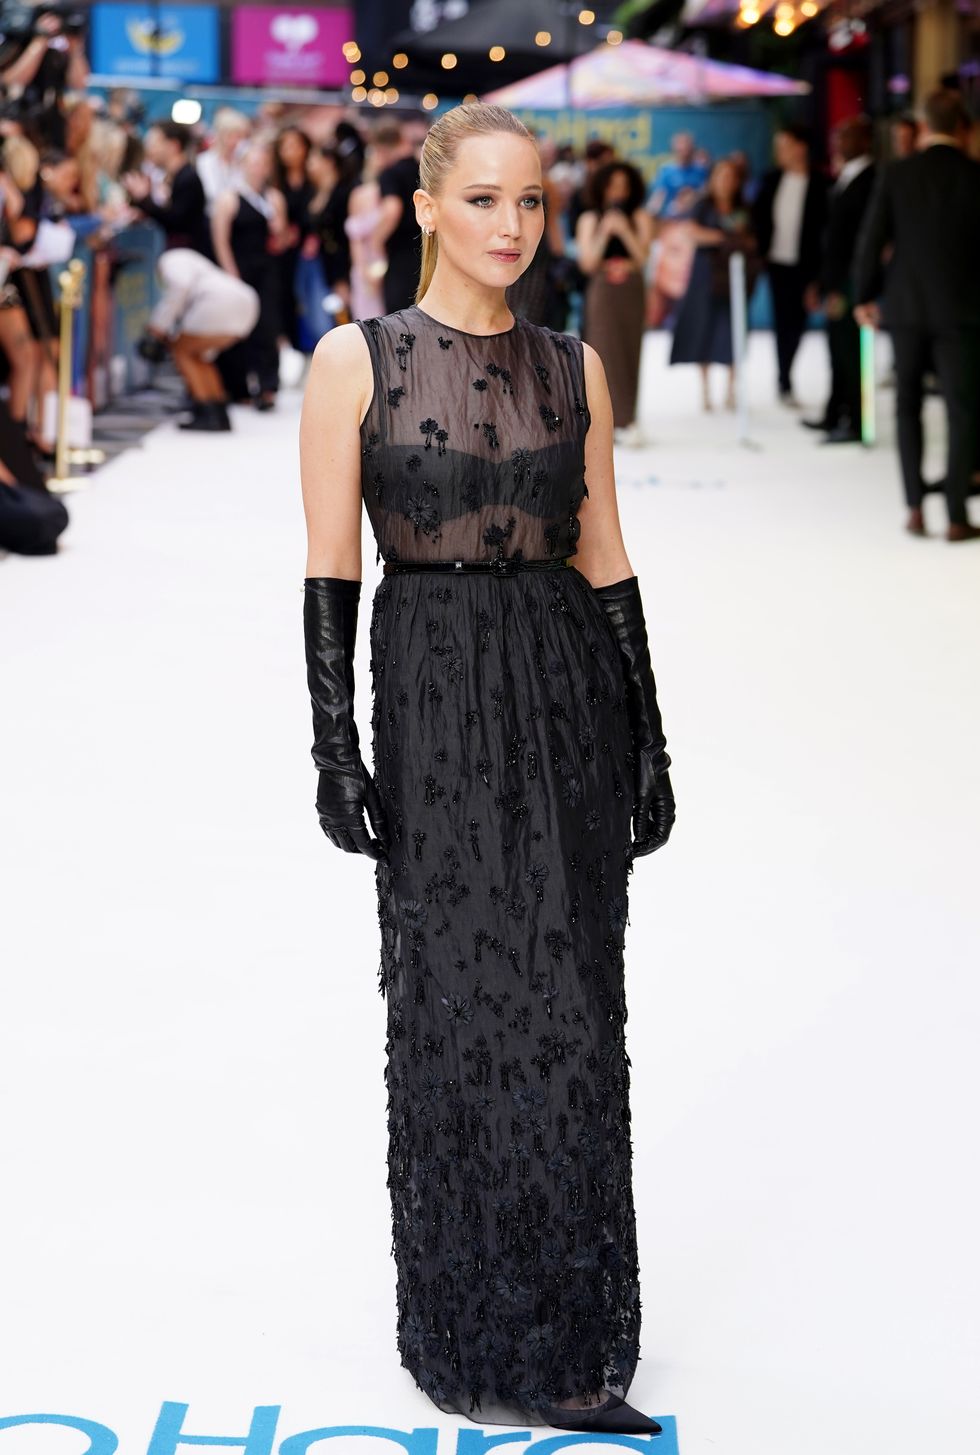 Jennifer Lawrence Has an Elegant Take on the Sheer Red-Carpet Trend